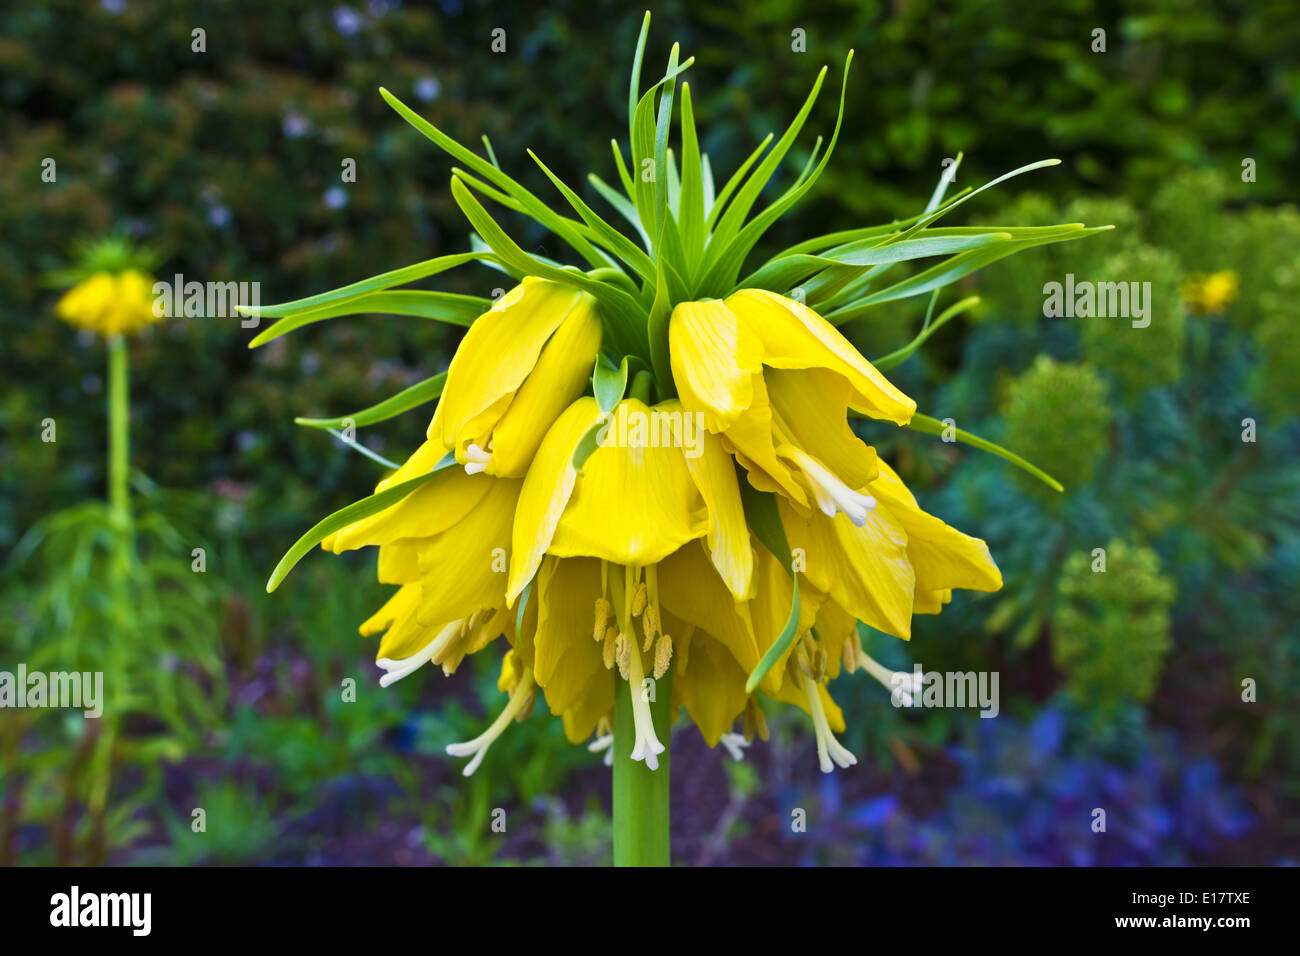 Crown imperial (Fritillaria imperialis) in an English garden. Stock Photo